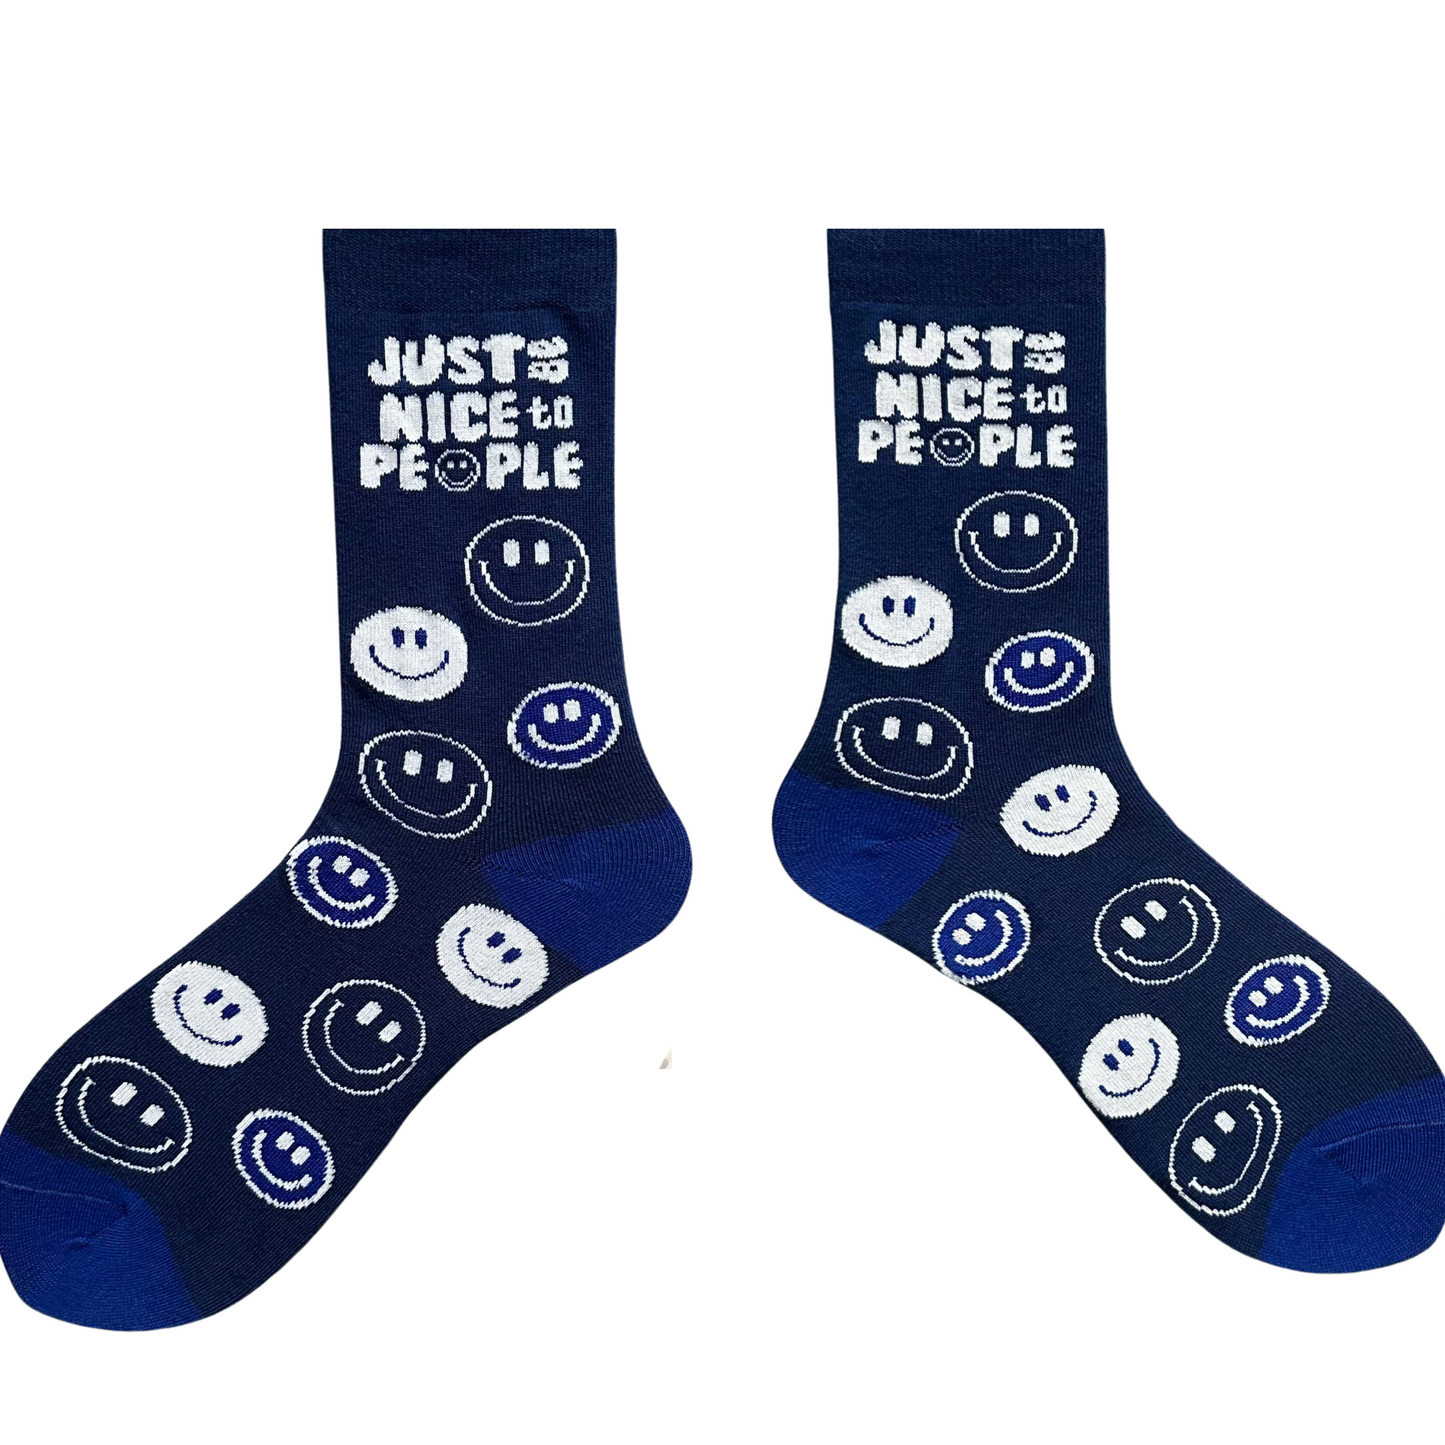 Just Be Nice Socks